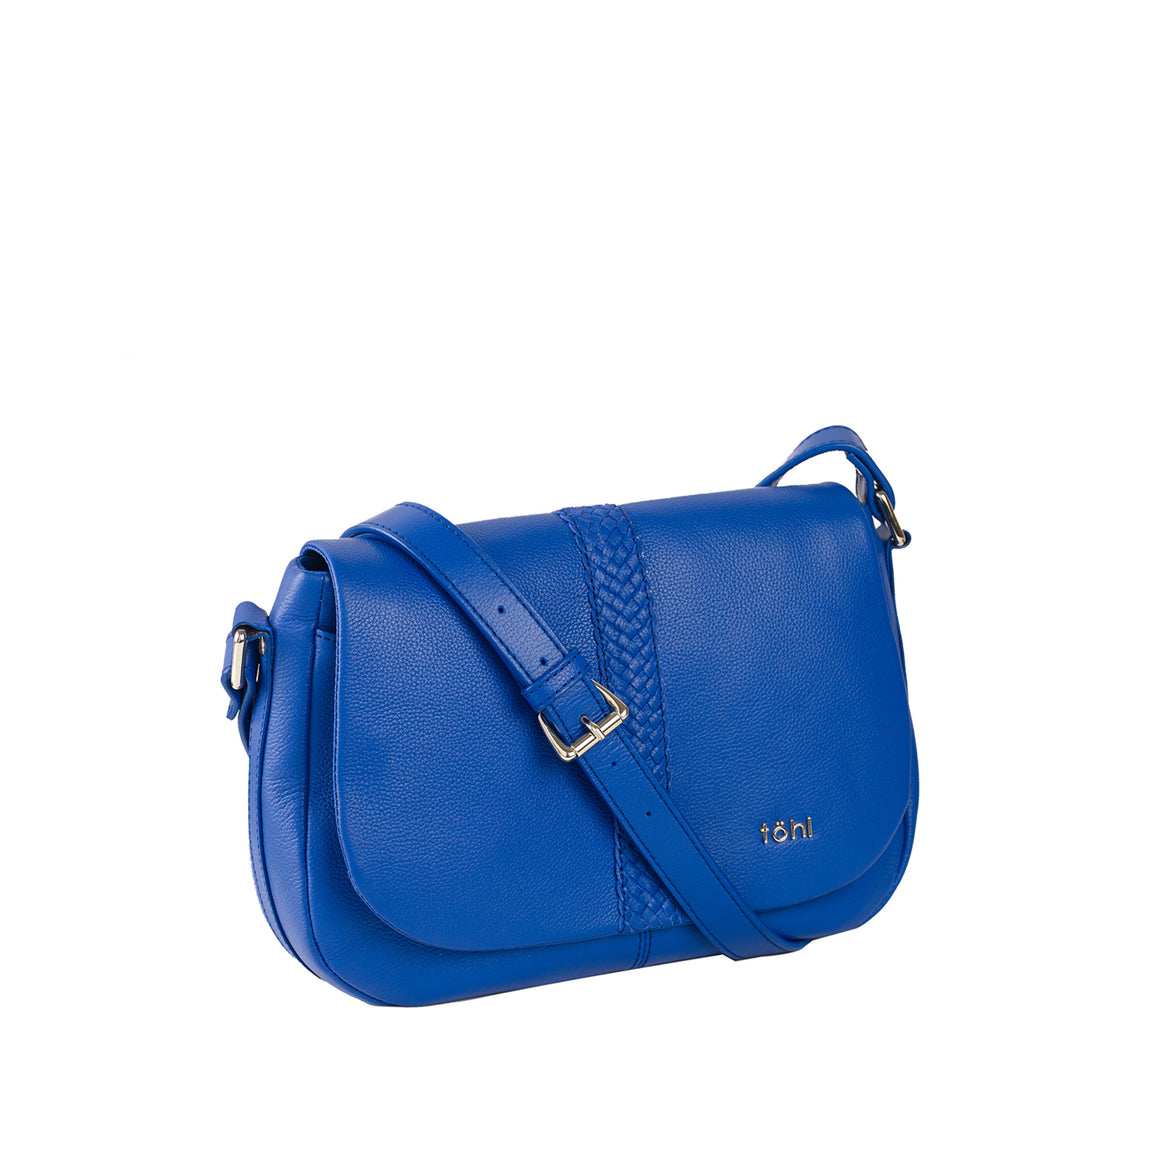 CARA WOMEN'S SLING BAG - COBALT BLUE